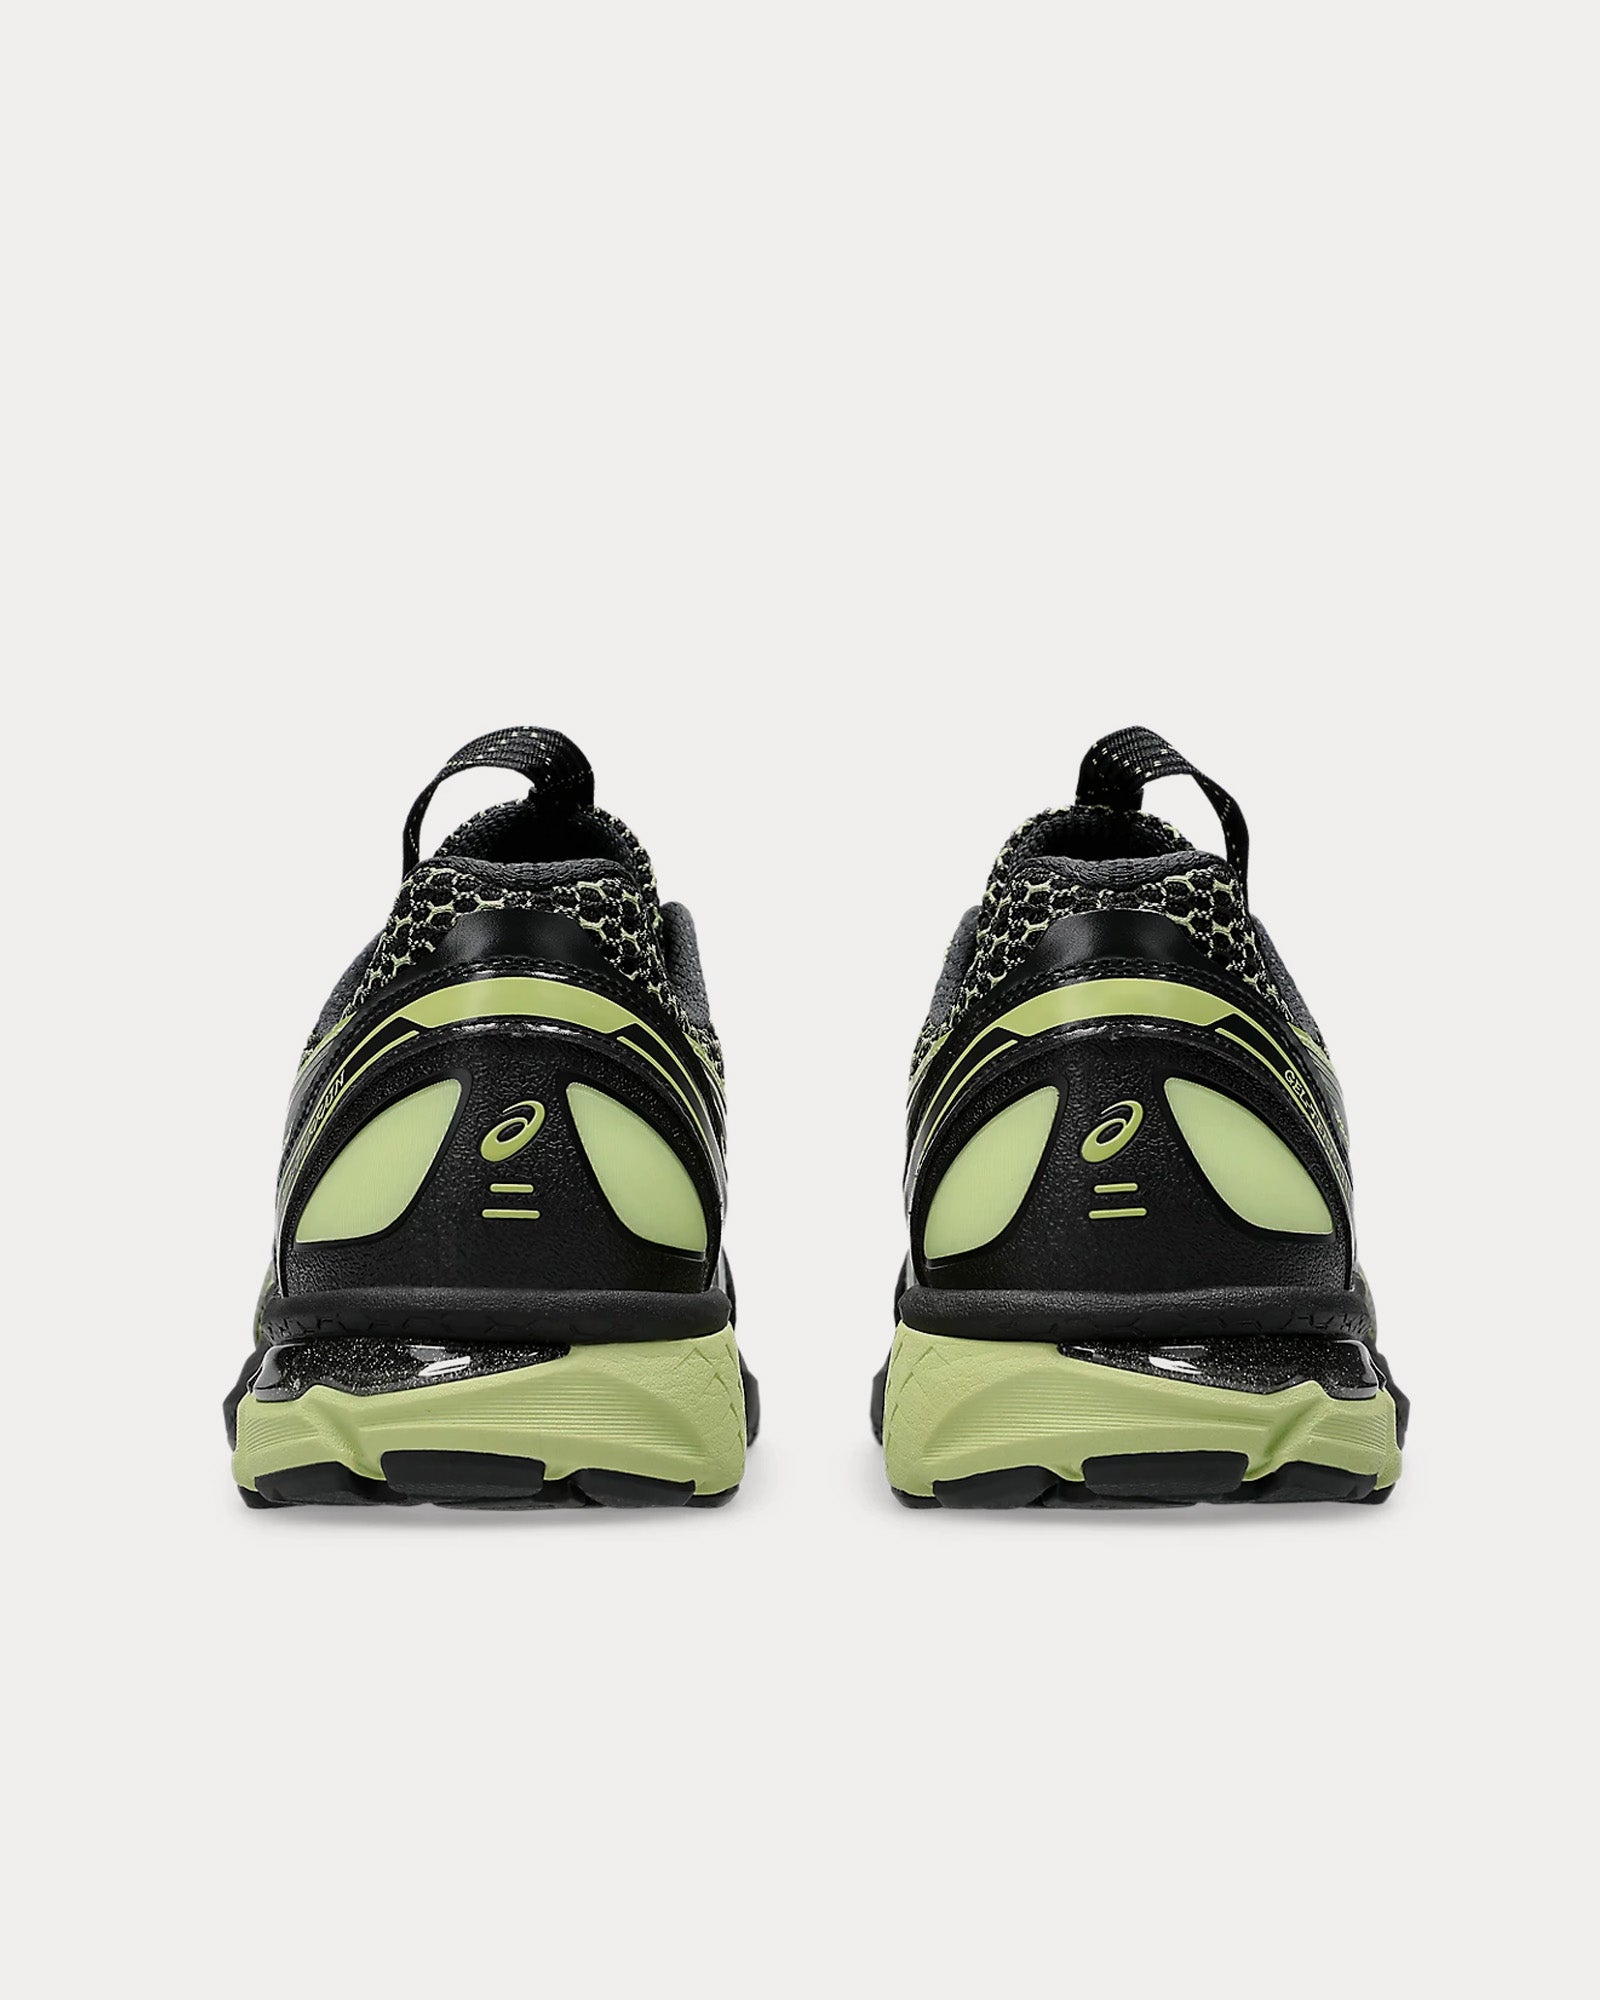 Asics x Kiko Kostadinov - US4-S Gel-Terrain Black / Neon Lime Low Top Sneakers